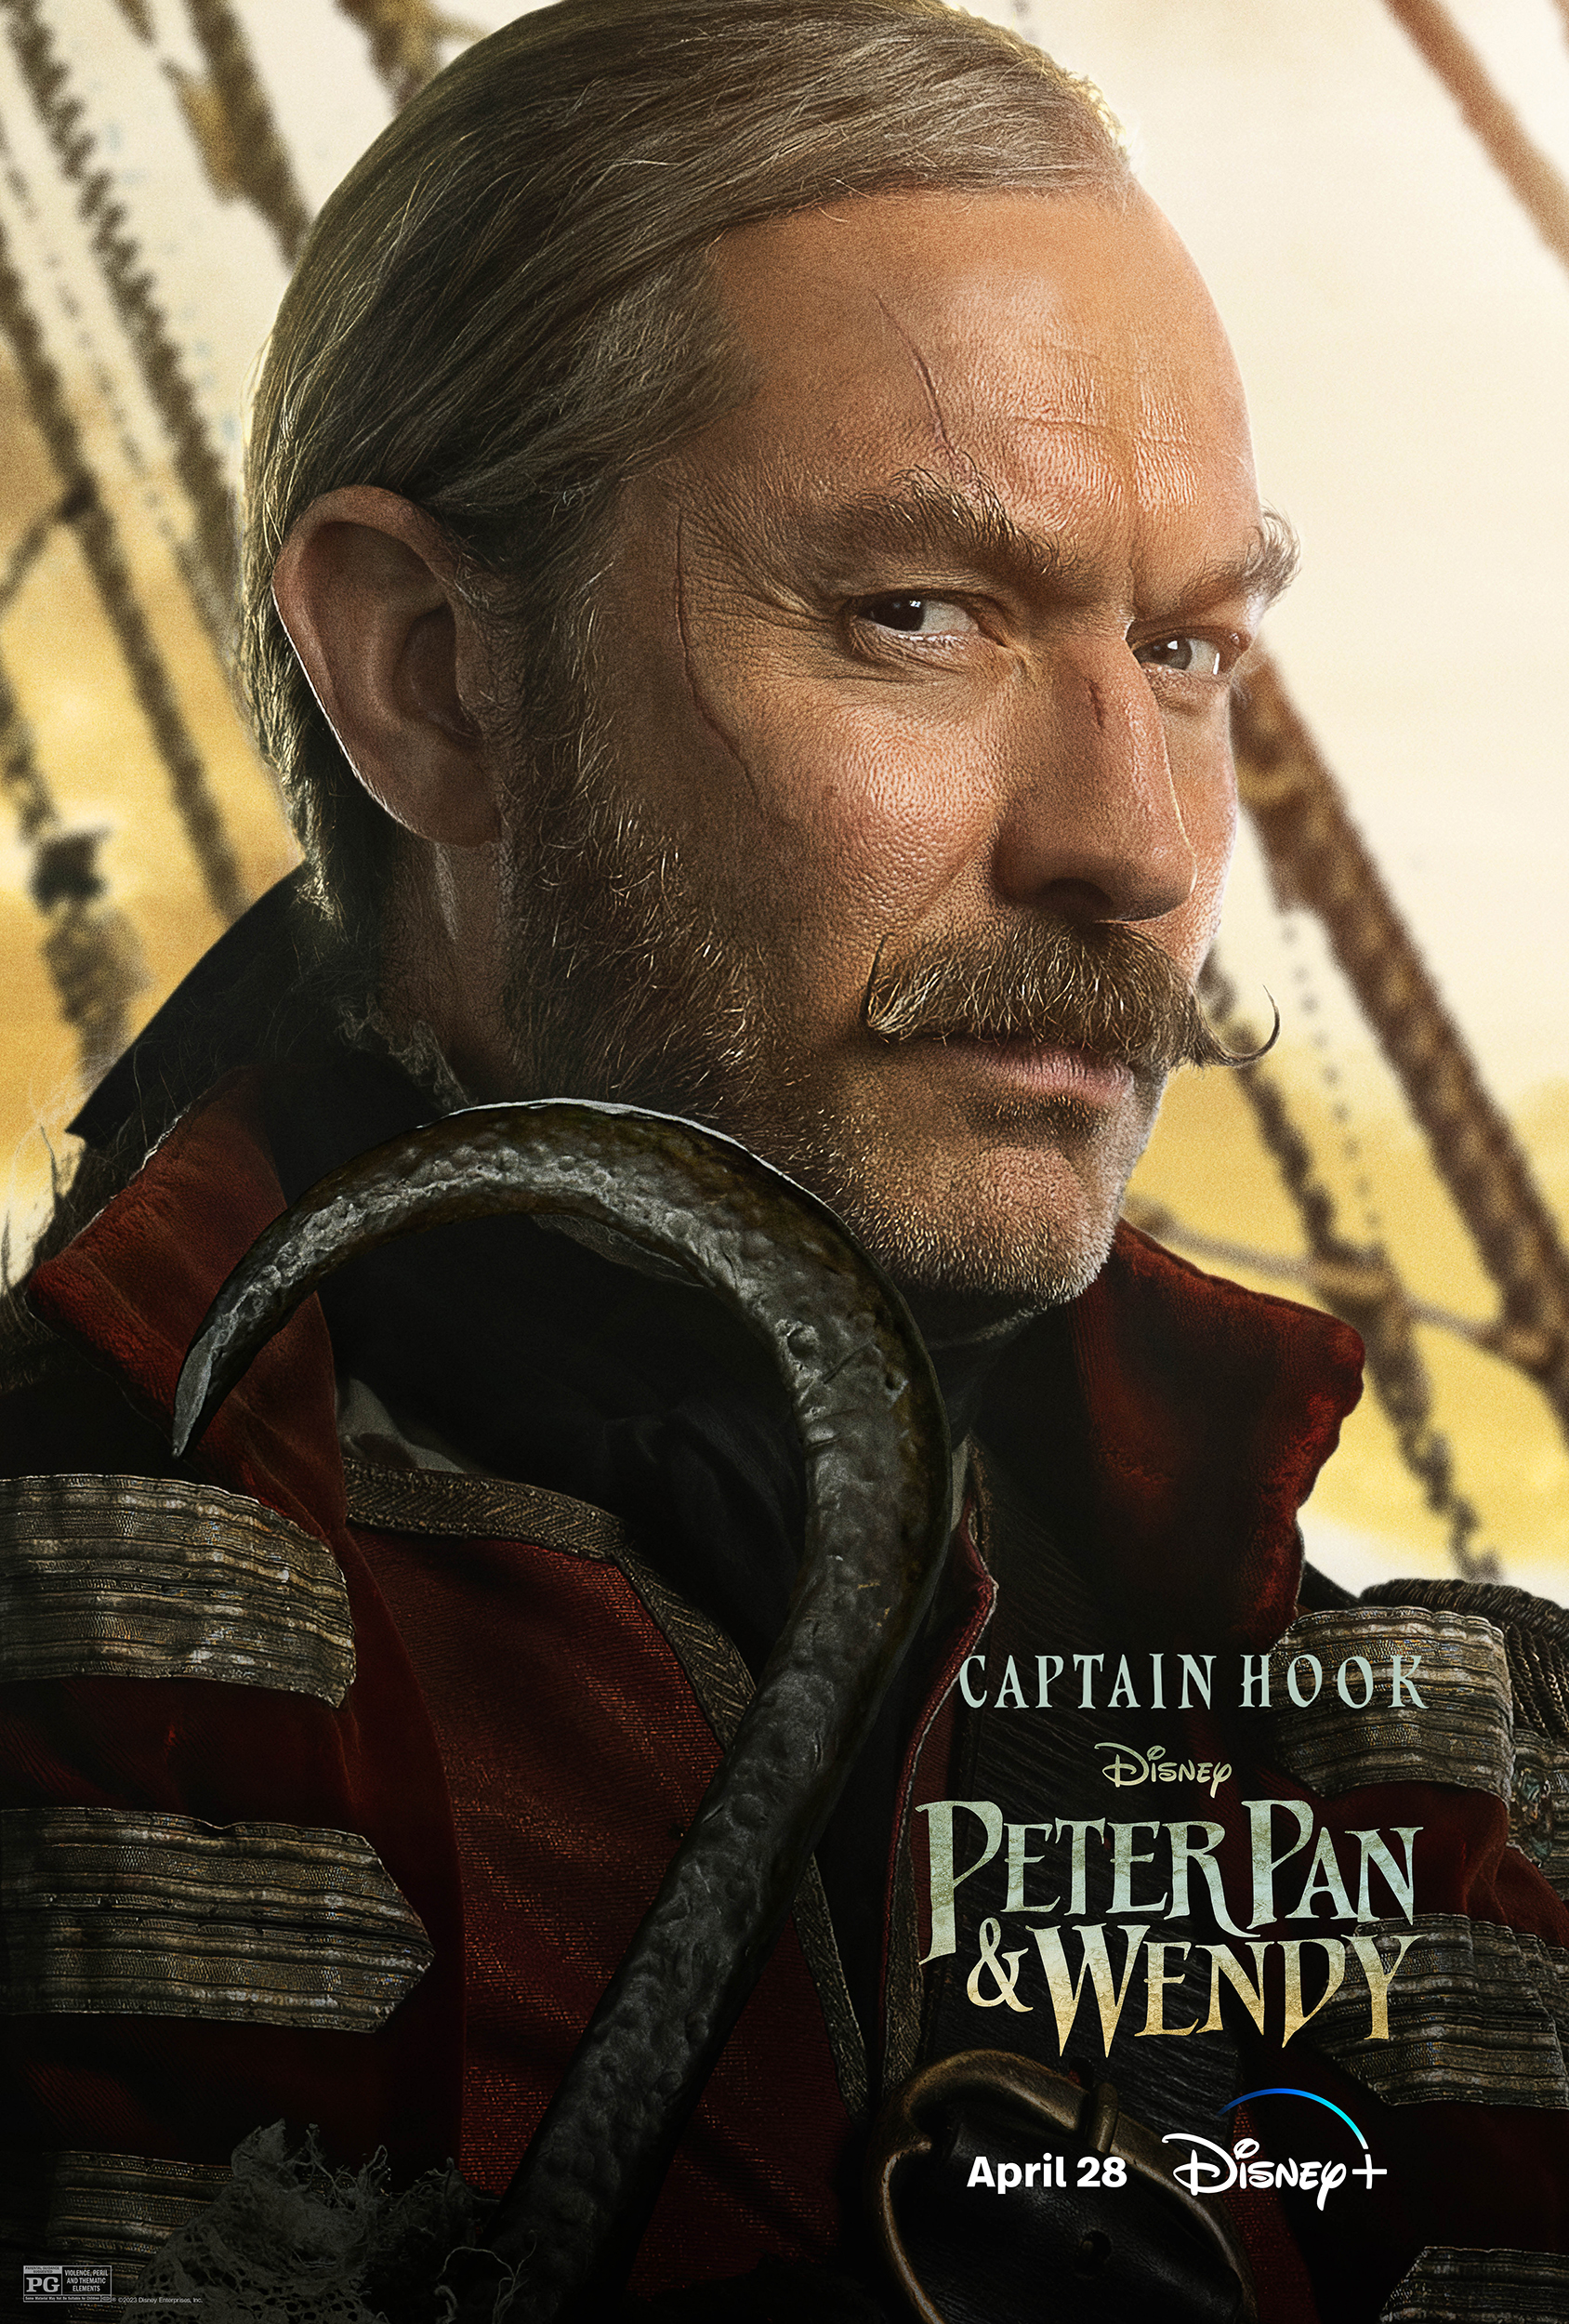 Captain hook as captain hook film title peter pan hi-res stock